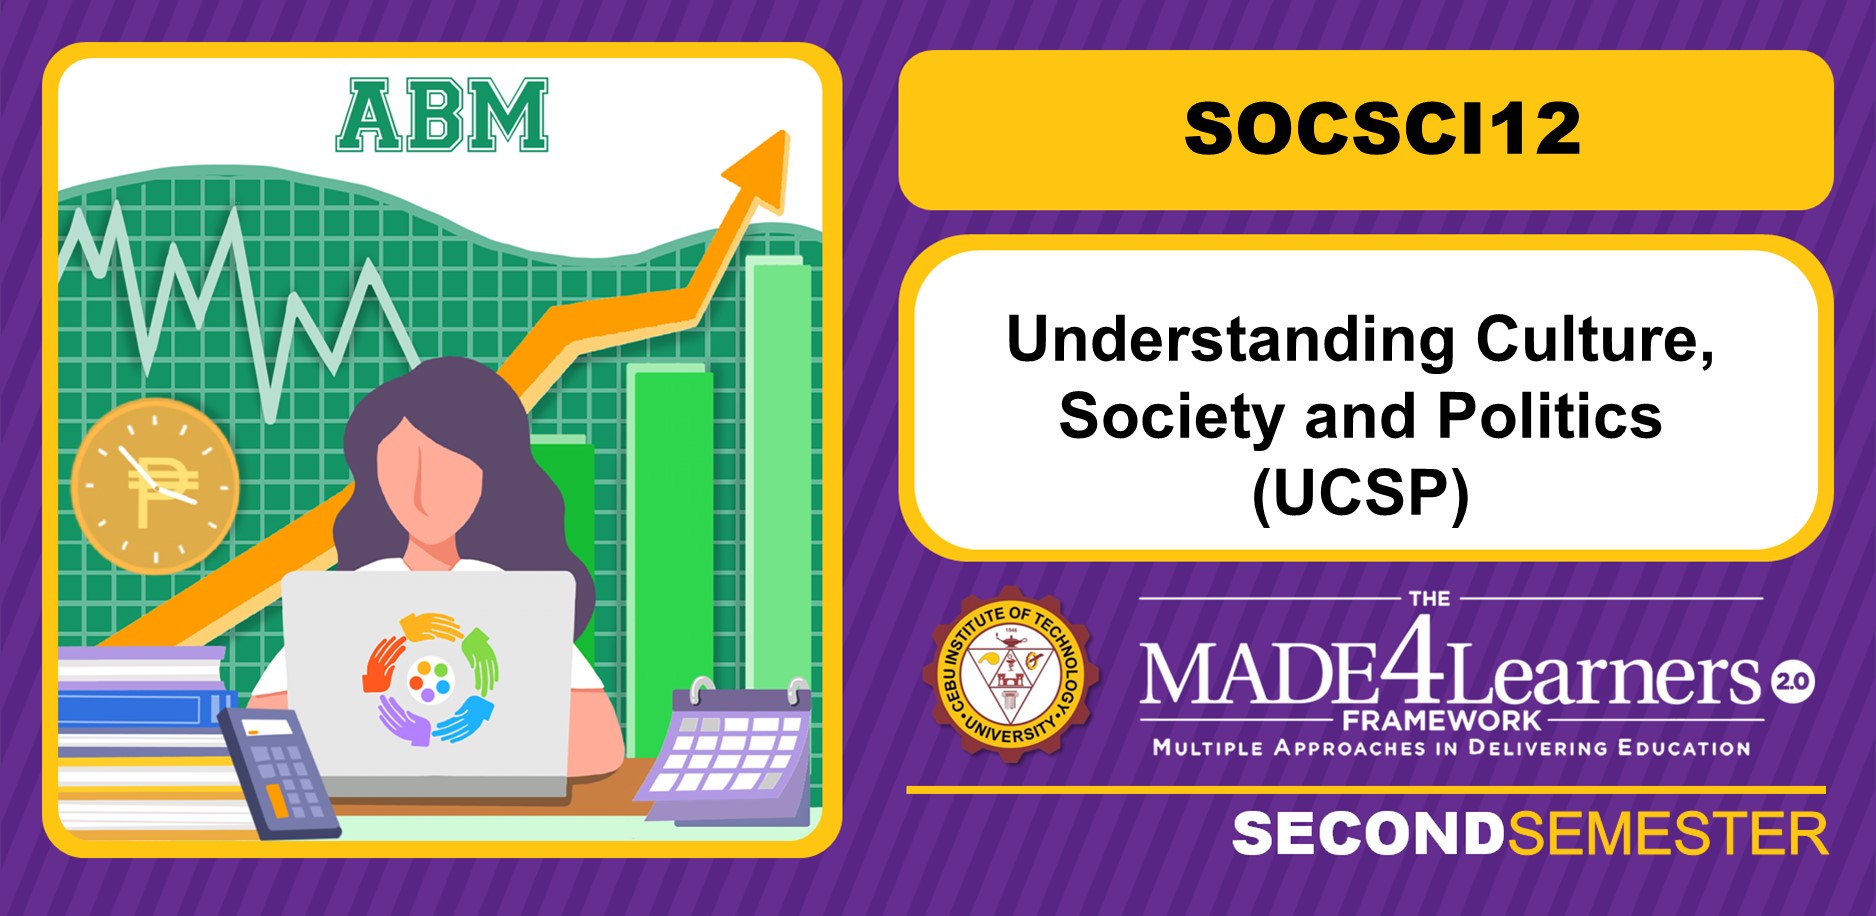 SOCSCI12: Understanding Culture, Society and Politics